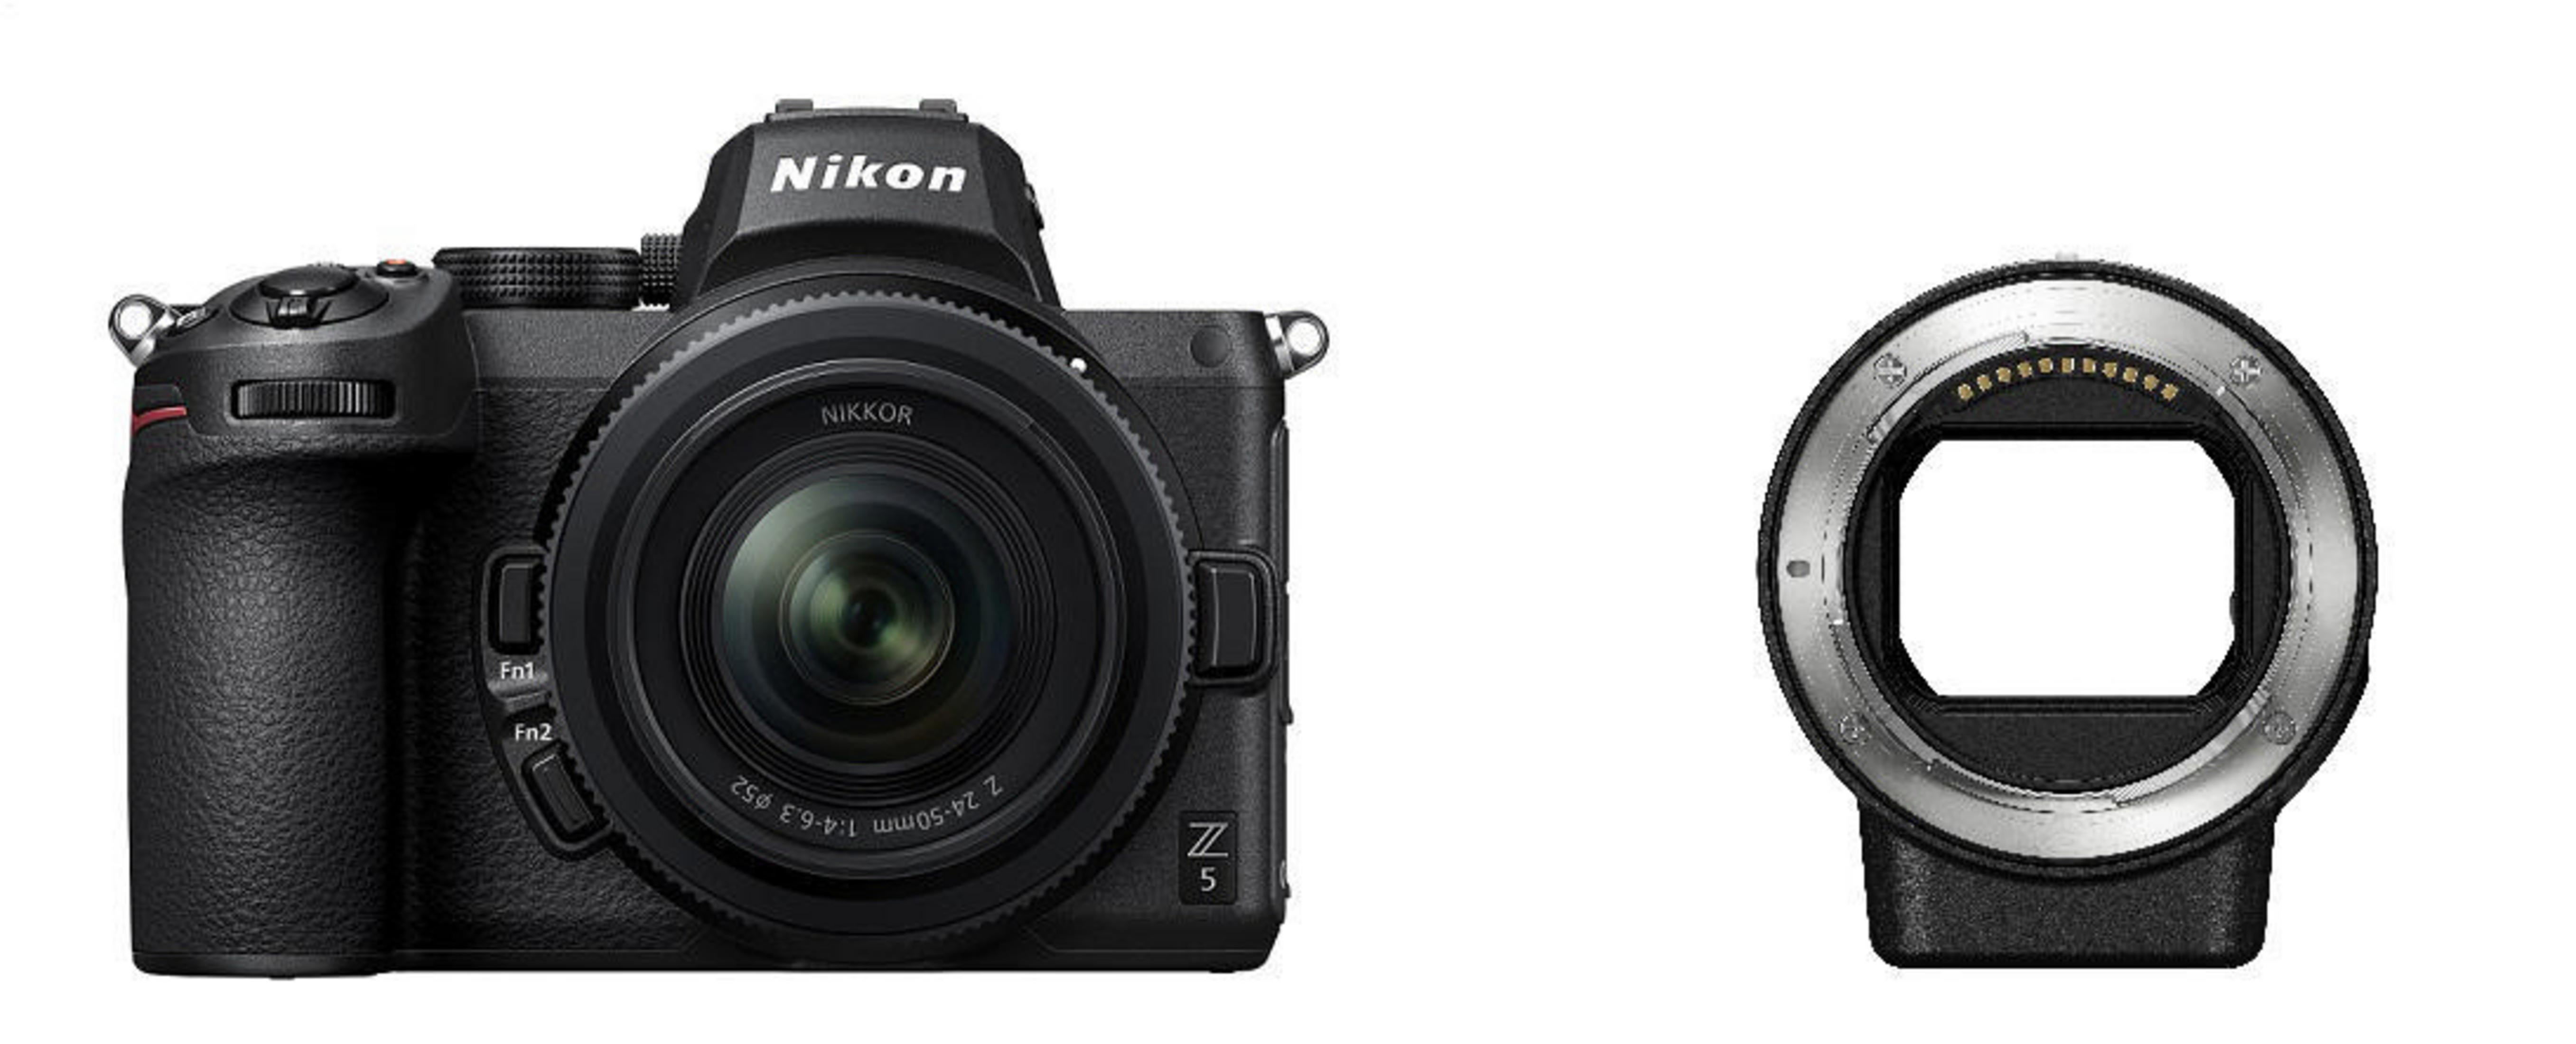 NIKON Z 5 + 8 MM 1:4.0-6.3 Objektiv Display cm 24-40 - VOA040K003 mm, Systemkamera Touchscreen, mit 24-50 WLAN